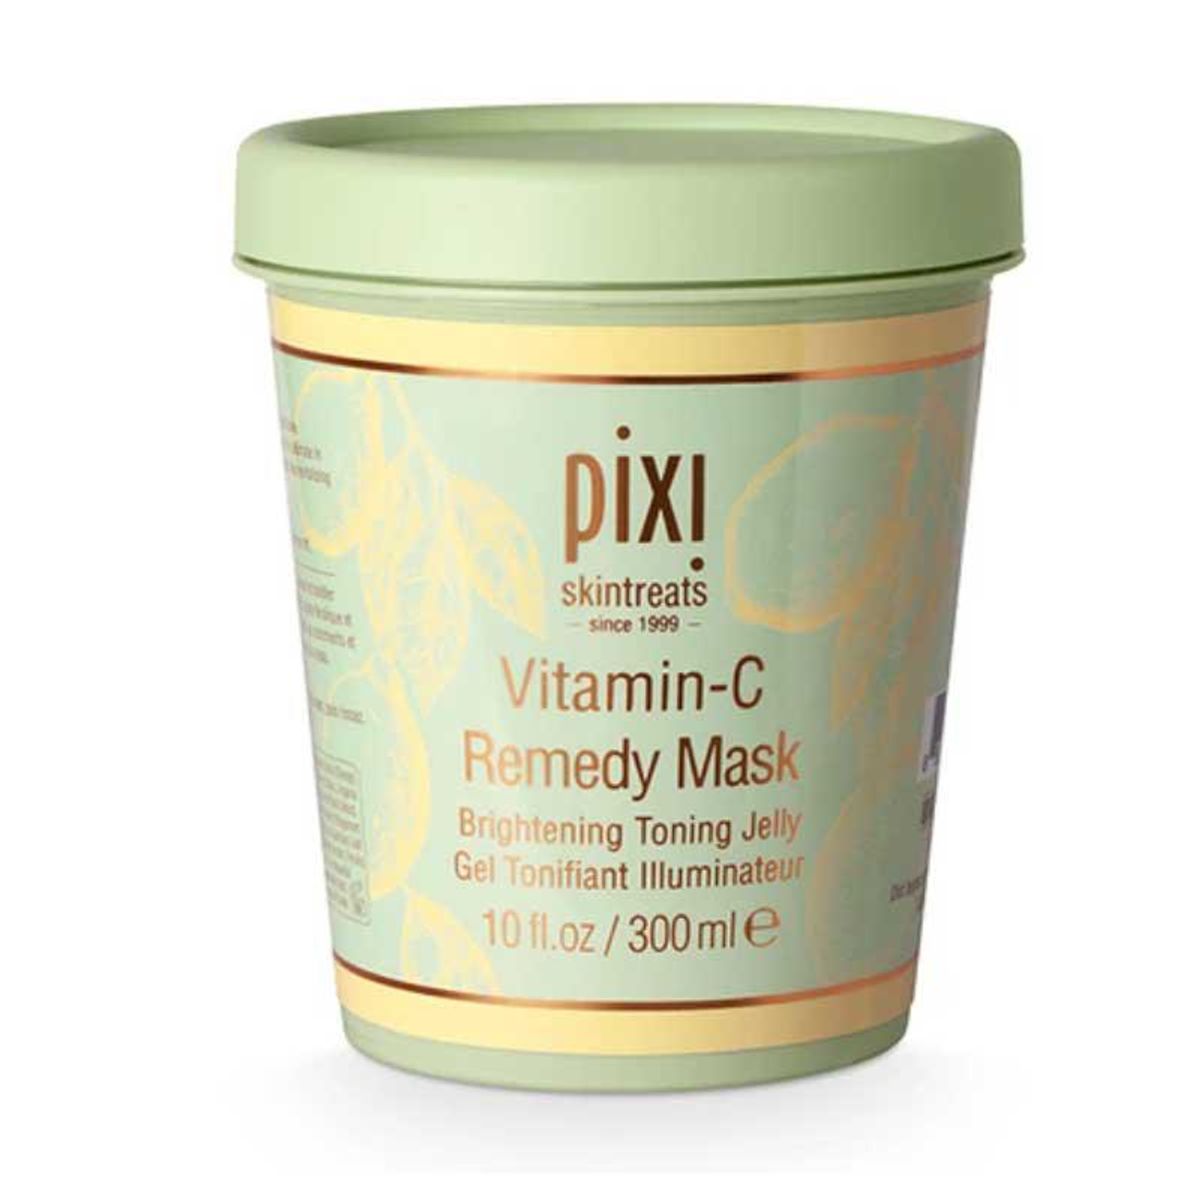 pixie vitamin-c remedy mask